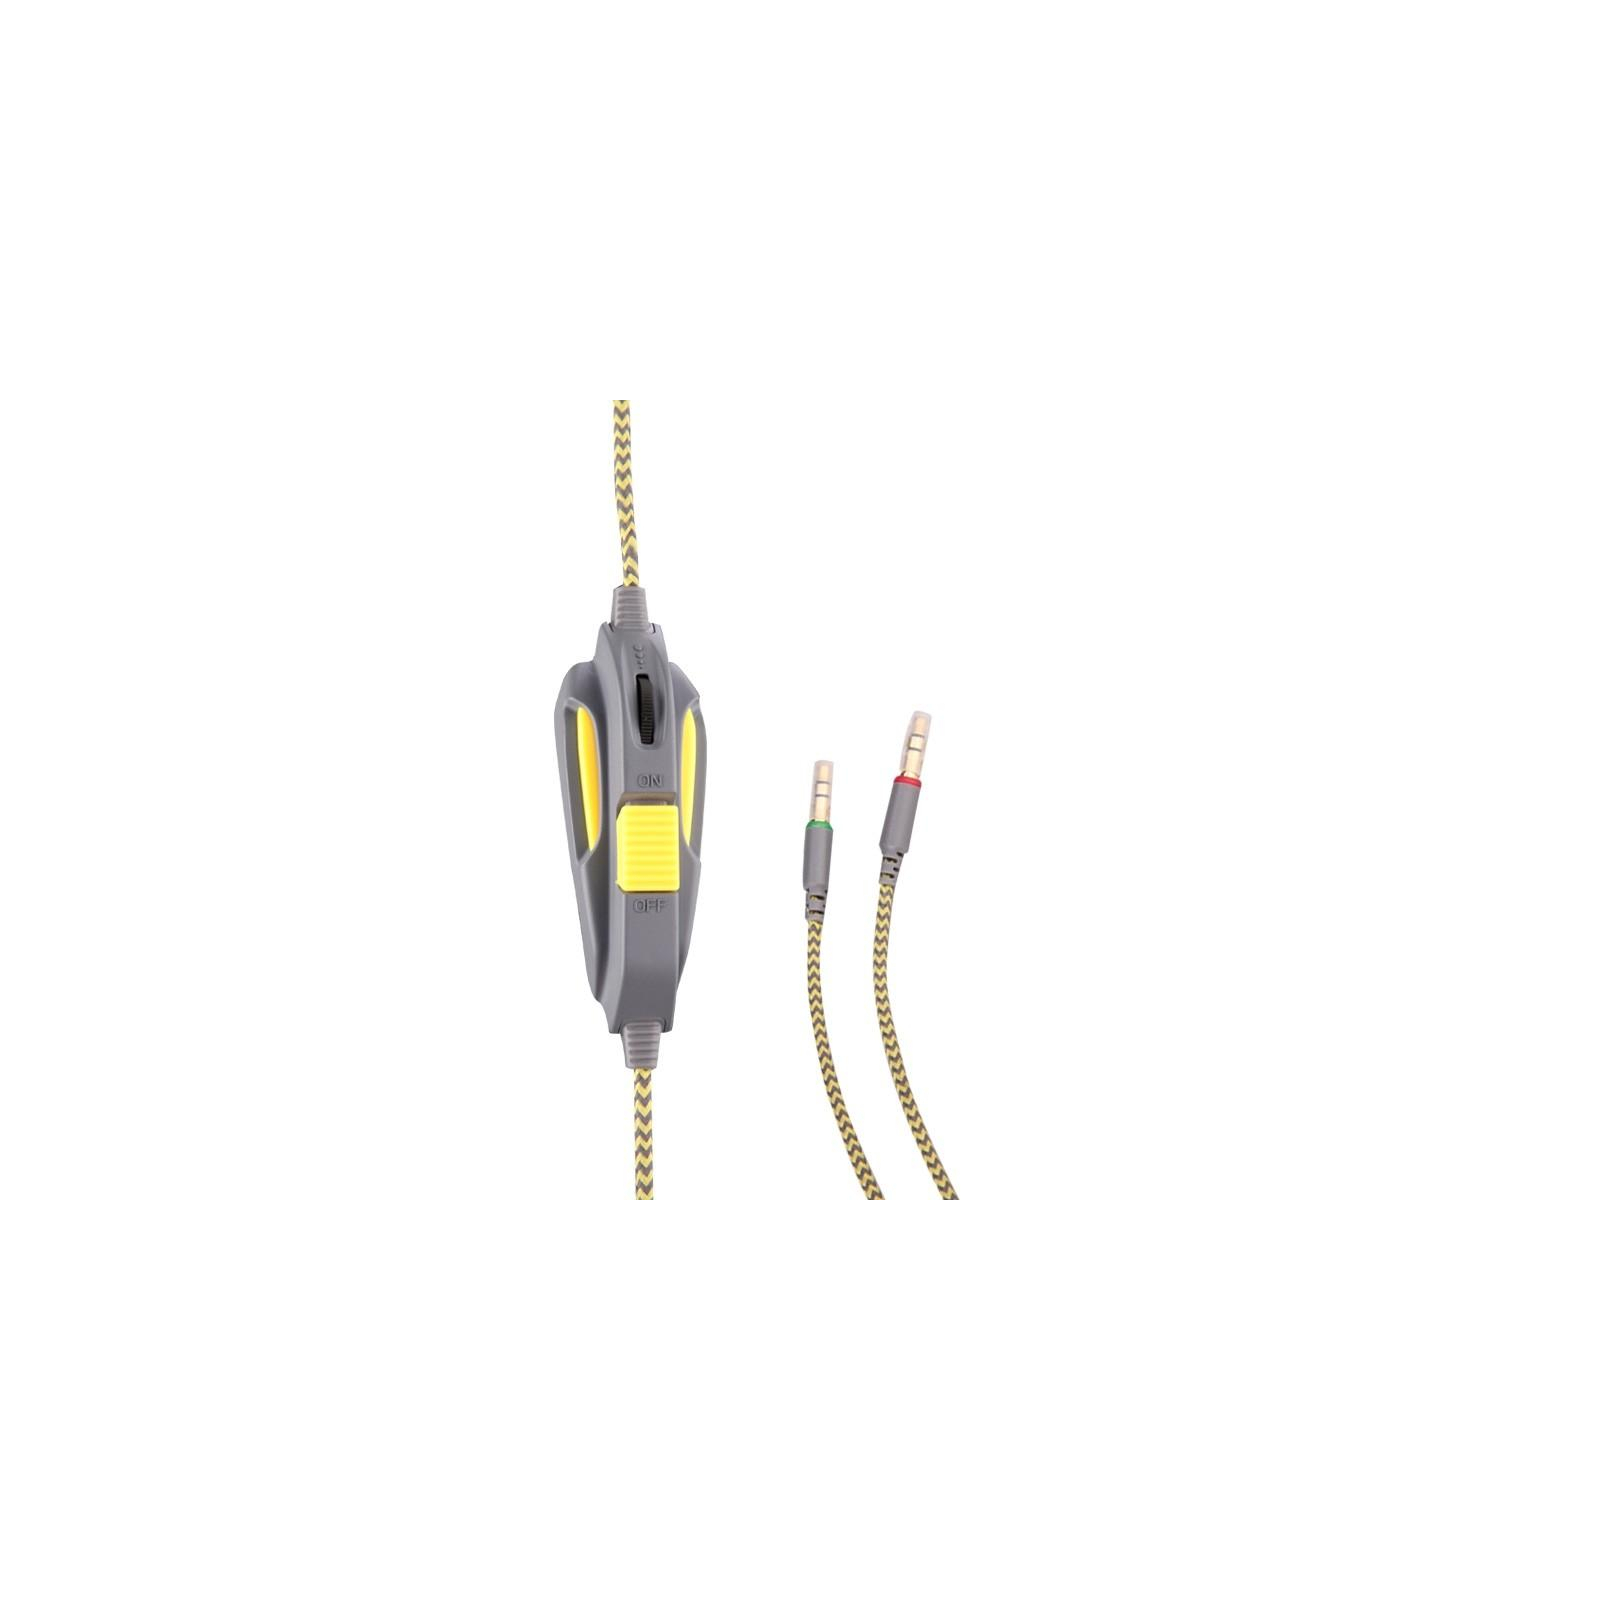 Наушники Sades Gpower Grey/Yellow (SA708-G-Y) изображение 3